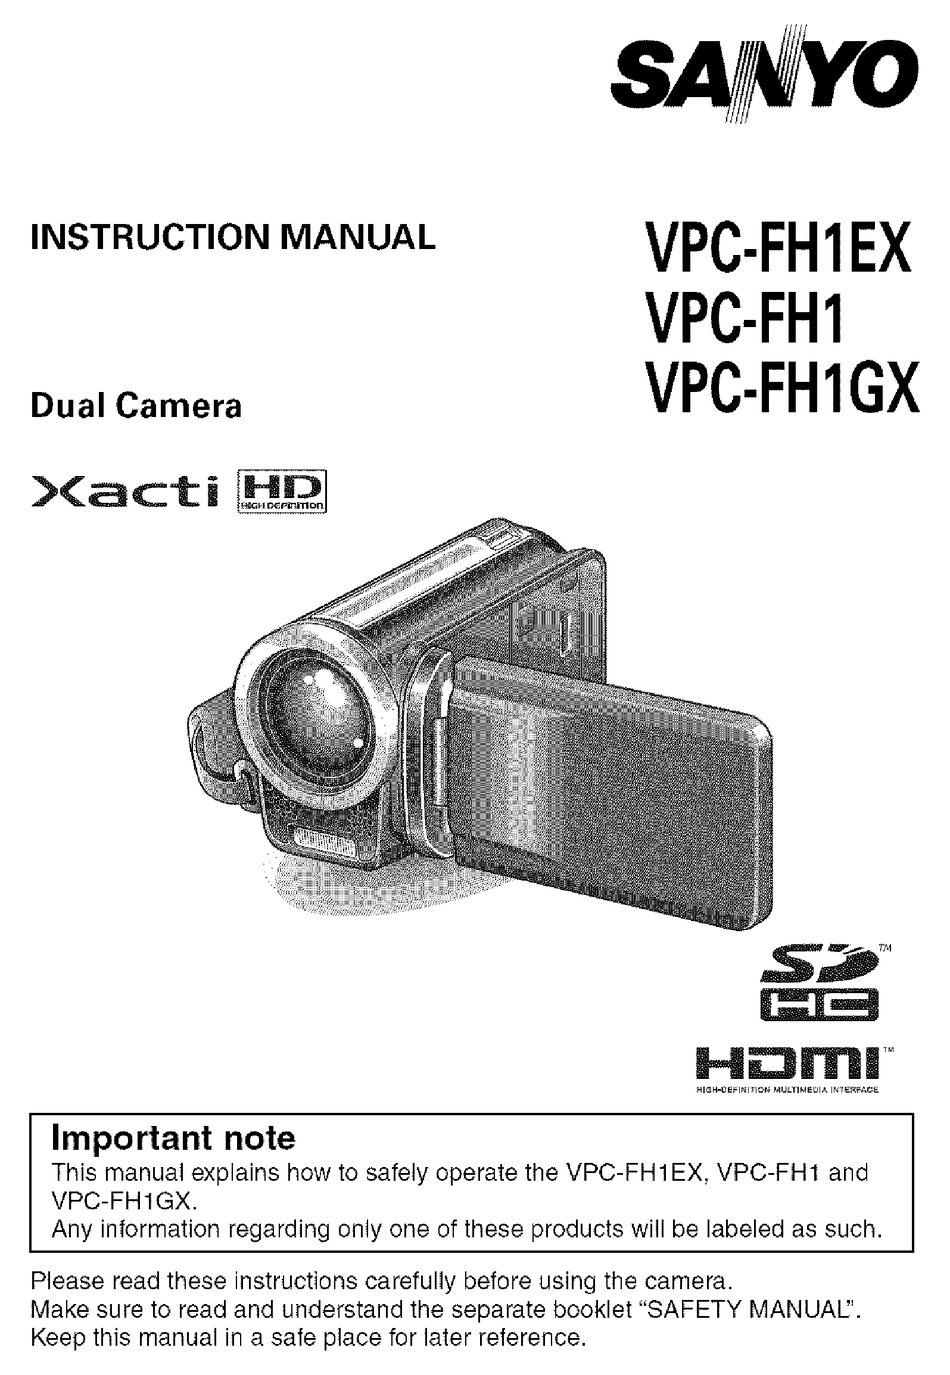 SANYO XACTI VPC-FH1 INSTRUCTION MANUAL Pdf Download | ManualsLib